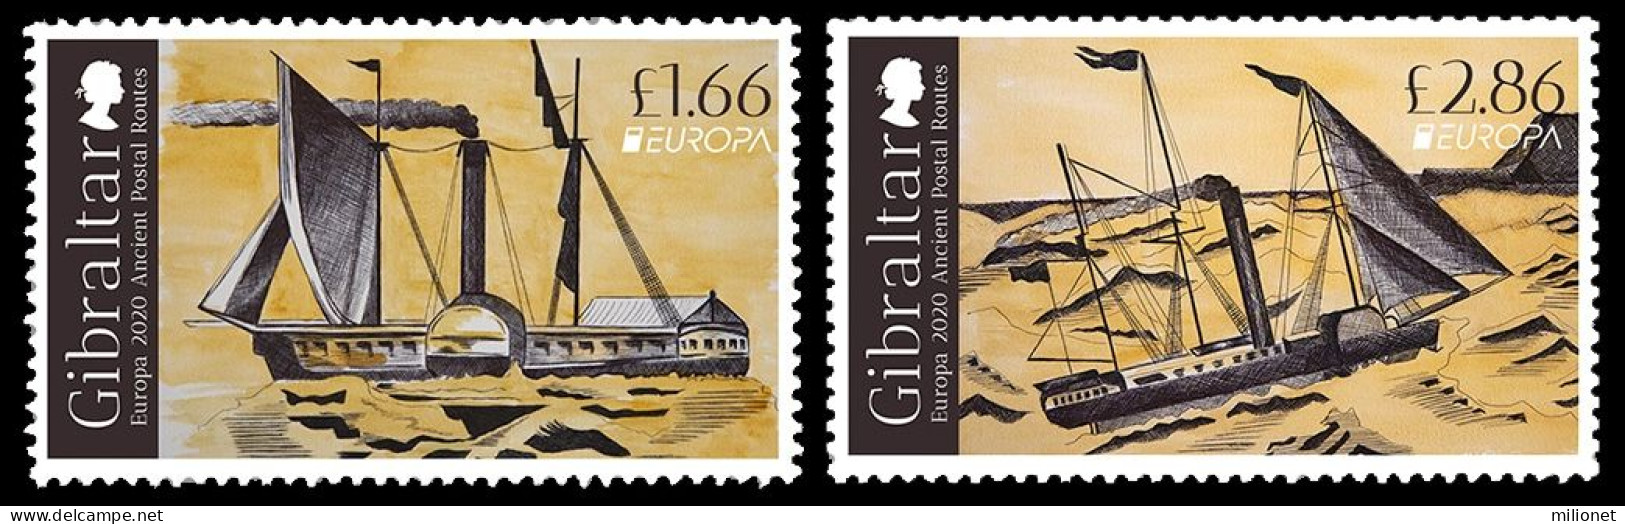 SALE!!! GIBRALTAR 2020 EUROPA Ancient Postal Routes 2 Stamps Set MNH ** - 2020